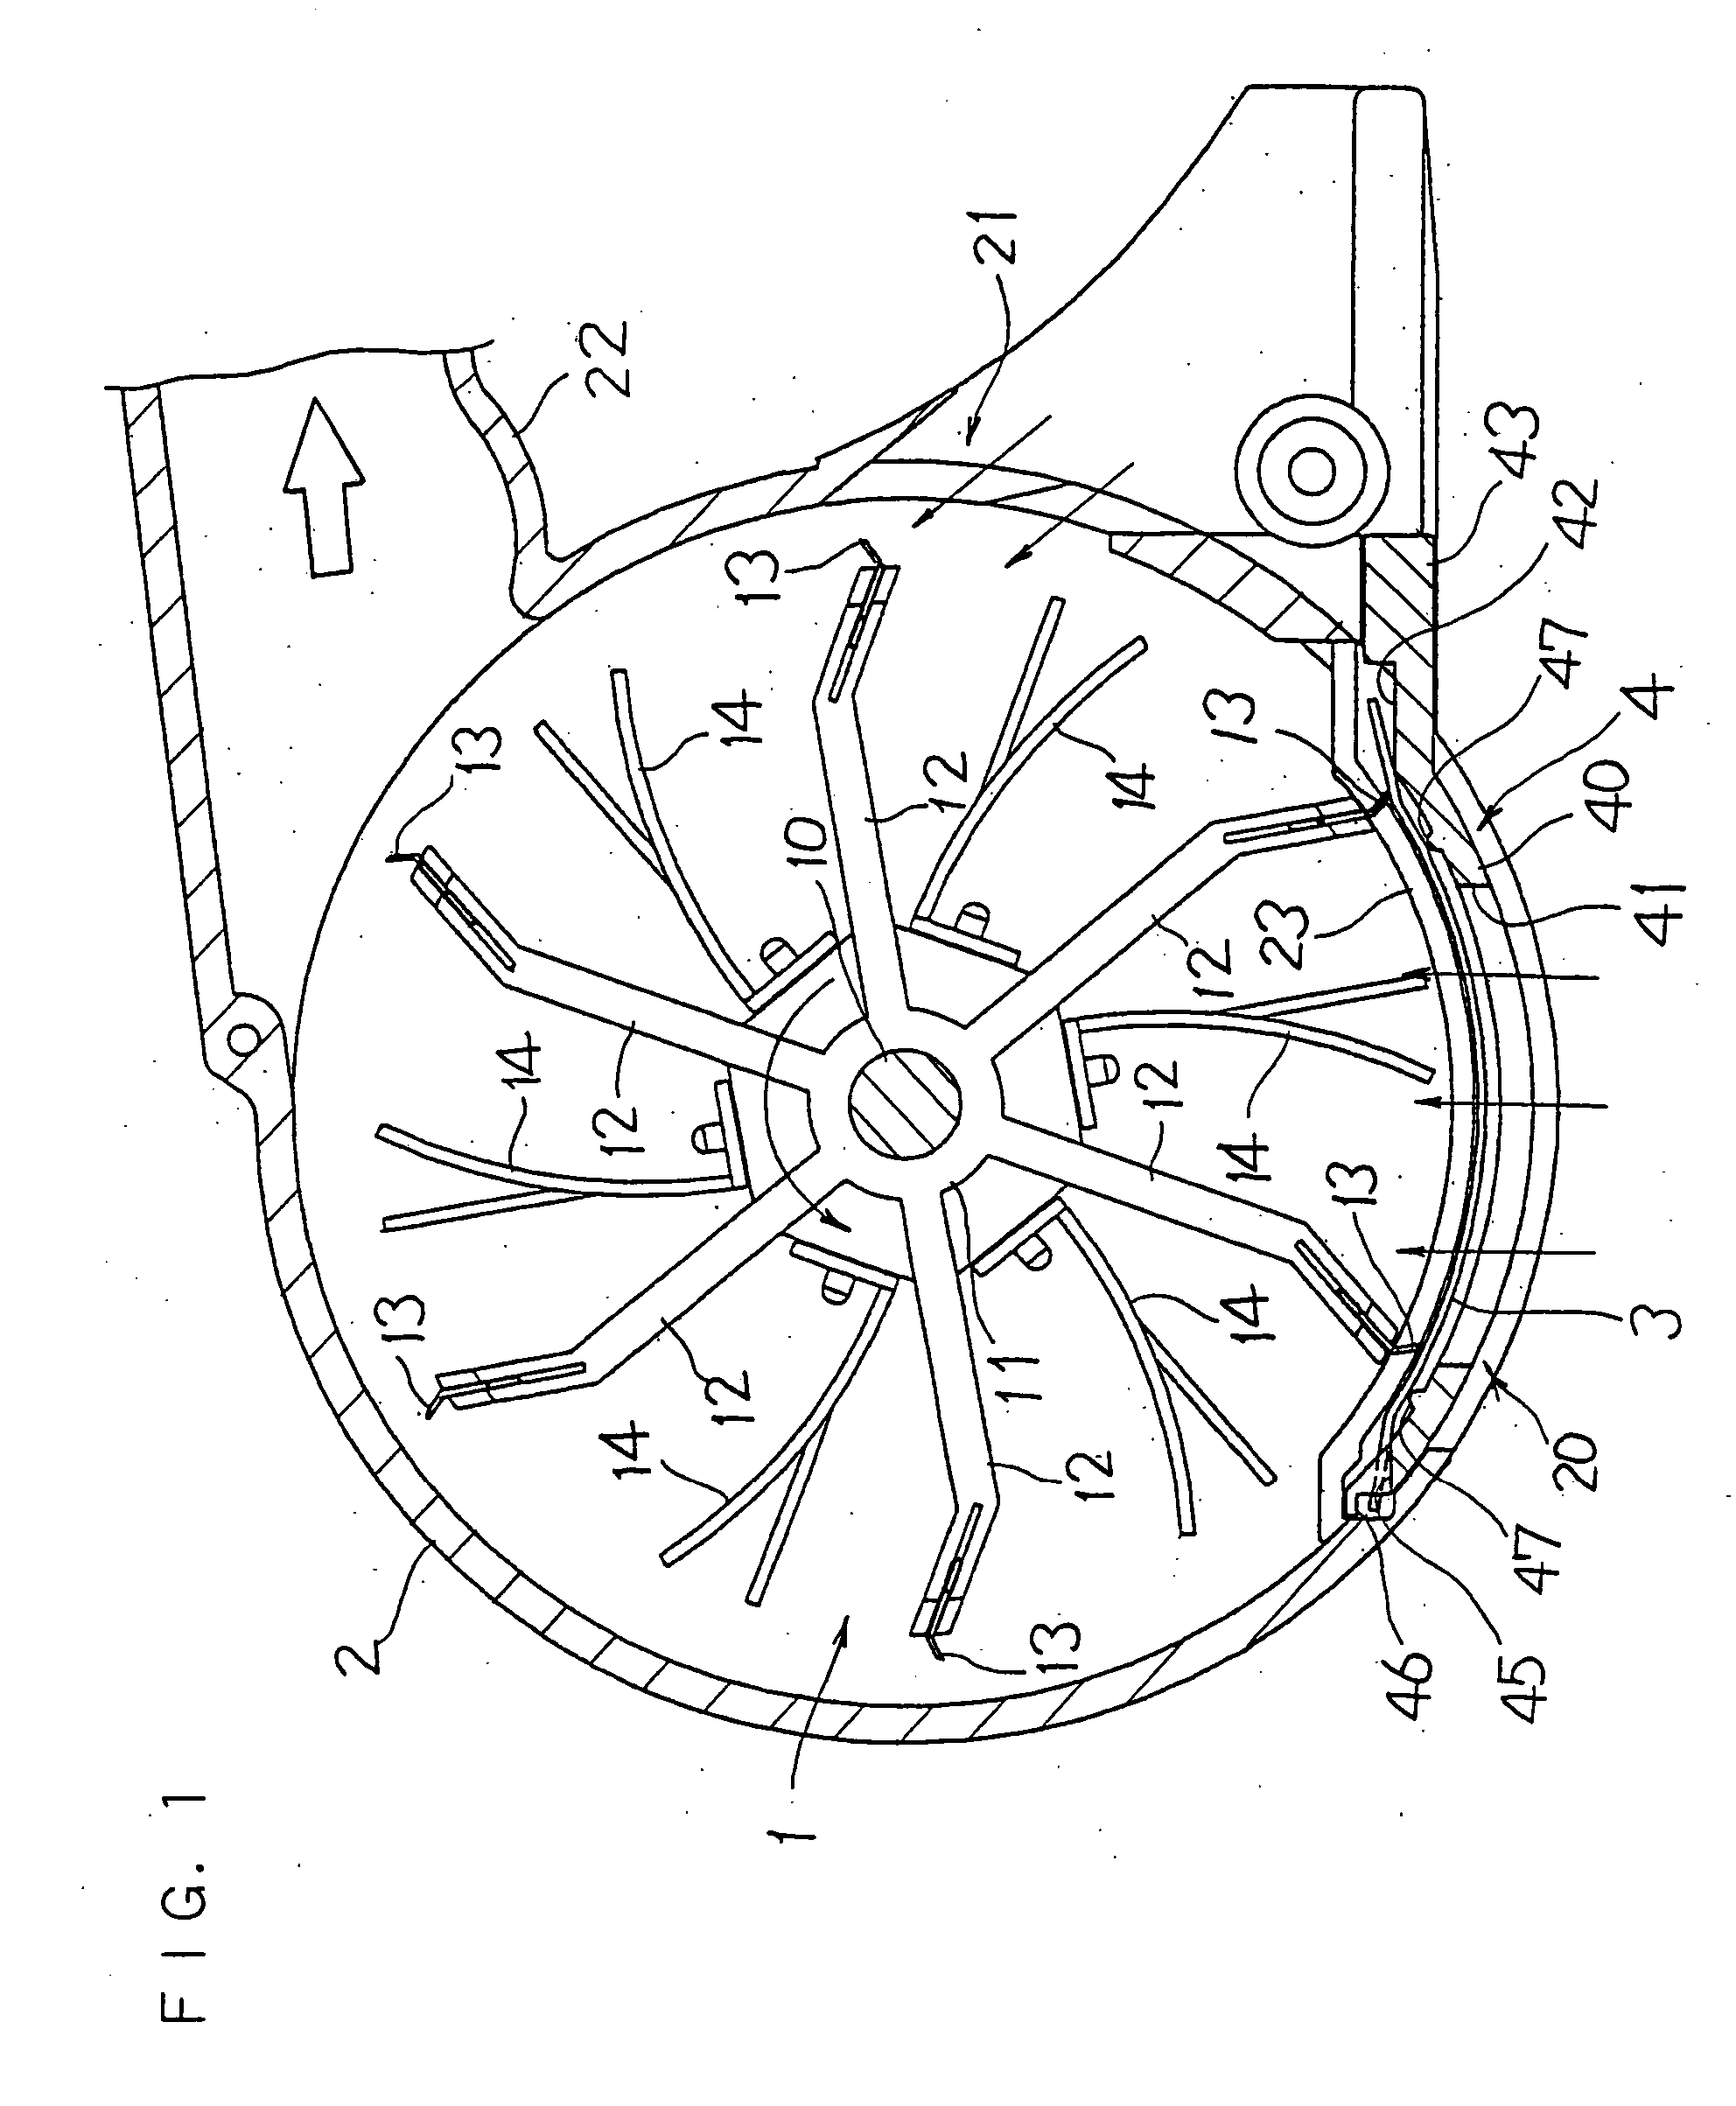 Rotary cutting apparatus